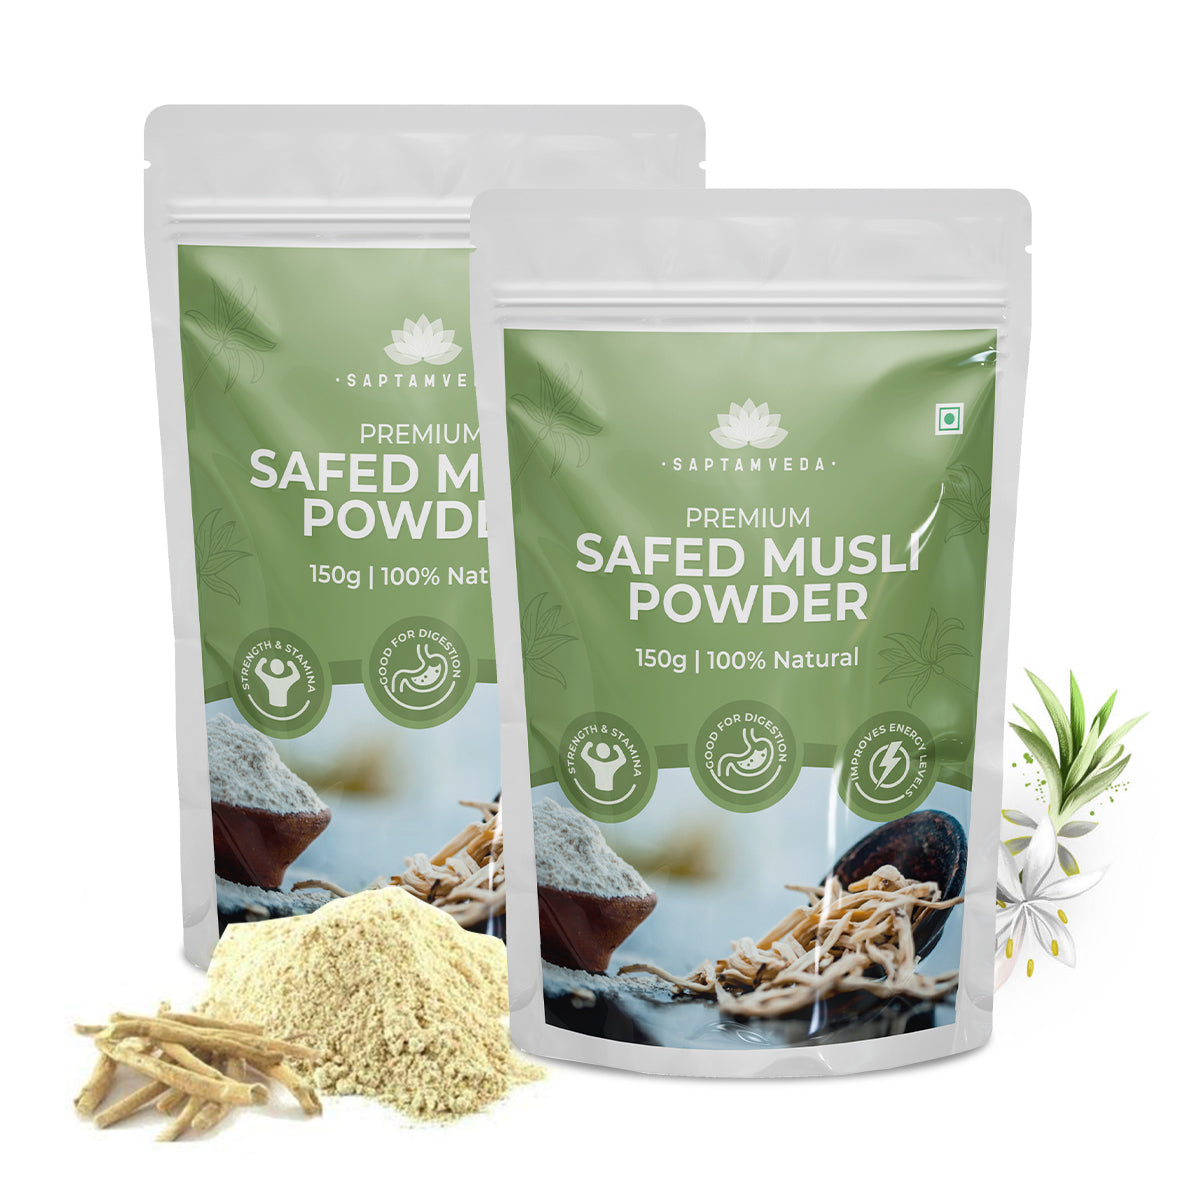 Buy 2 Premium Safed Musli Powder